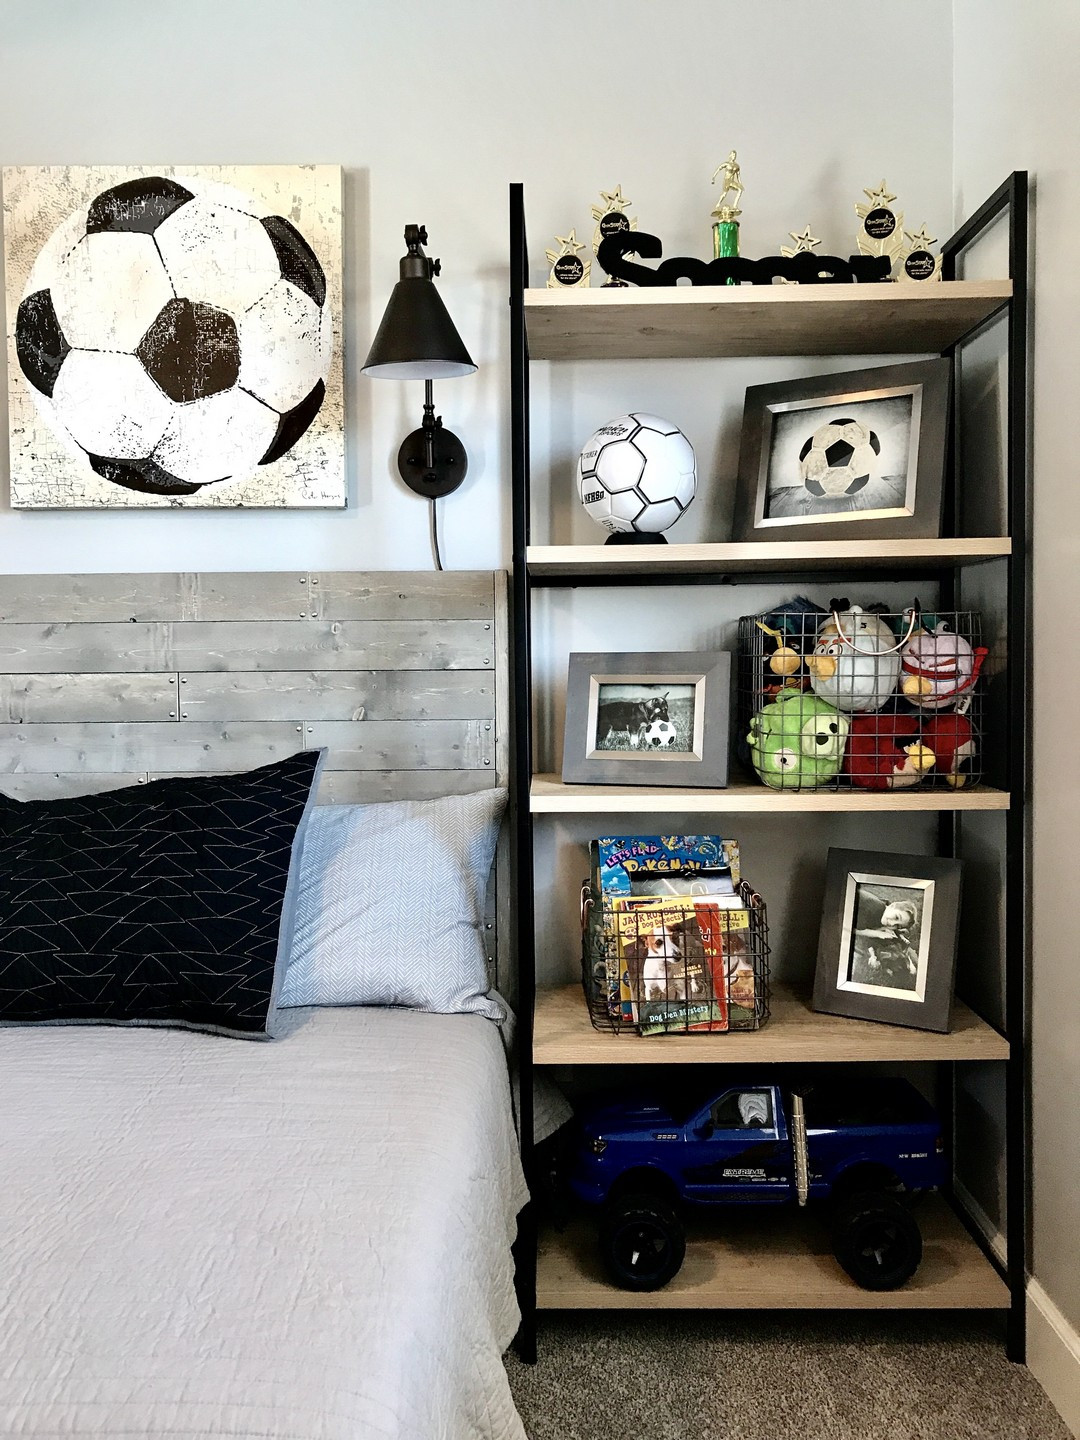 Soccer Decorations For Bedroom
 Stylish Soccer Themed Bedroom Design For Boys 3 De agz